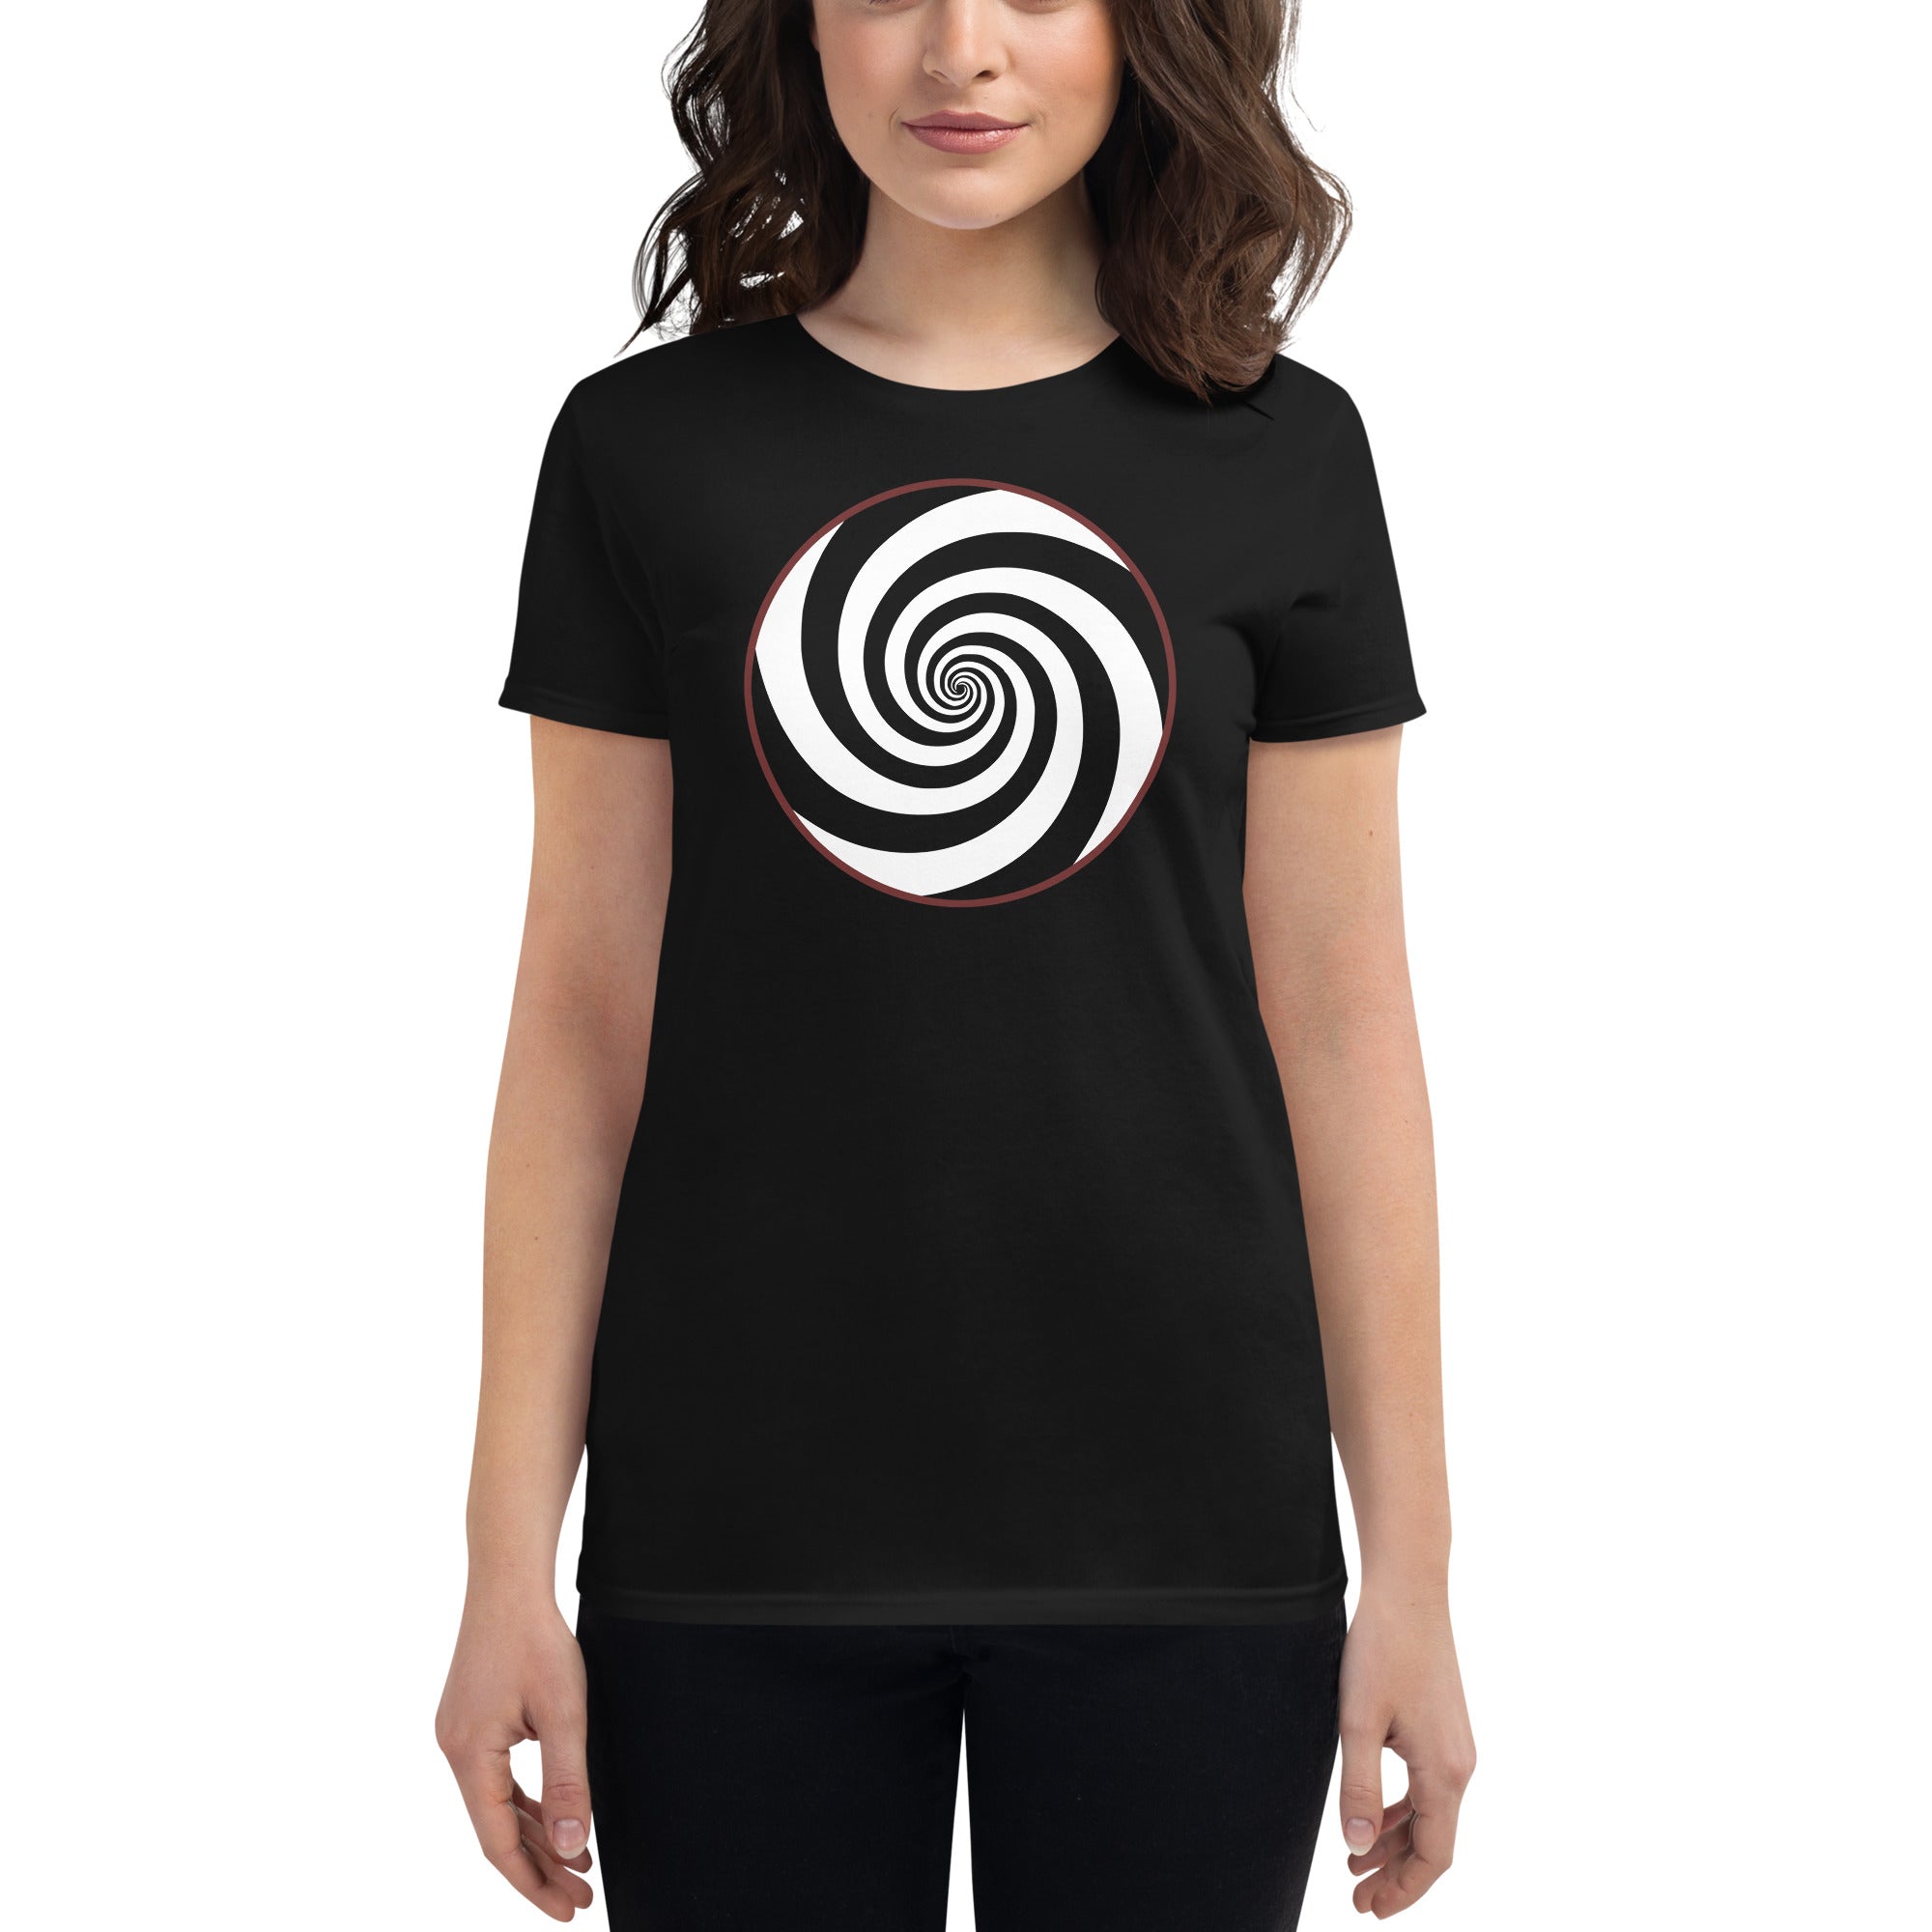 Hypnotic Hypnosis Spiral Swirl Illusion Twilight Zone Women's Short Sleeve Babydoll T-shirt